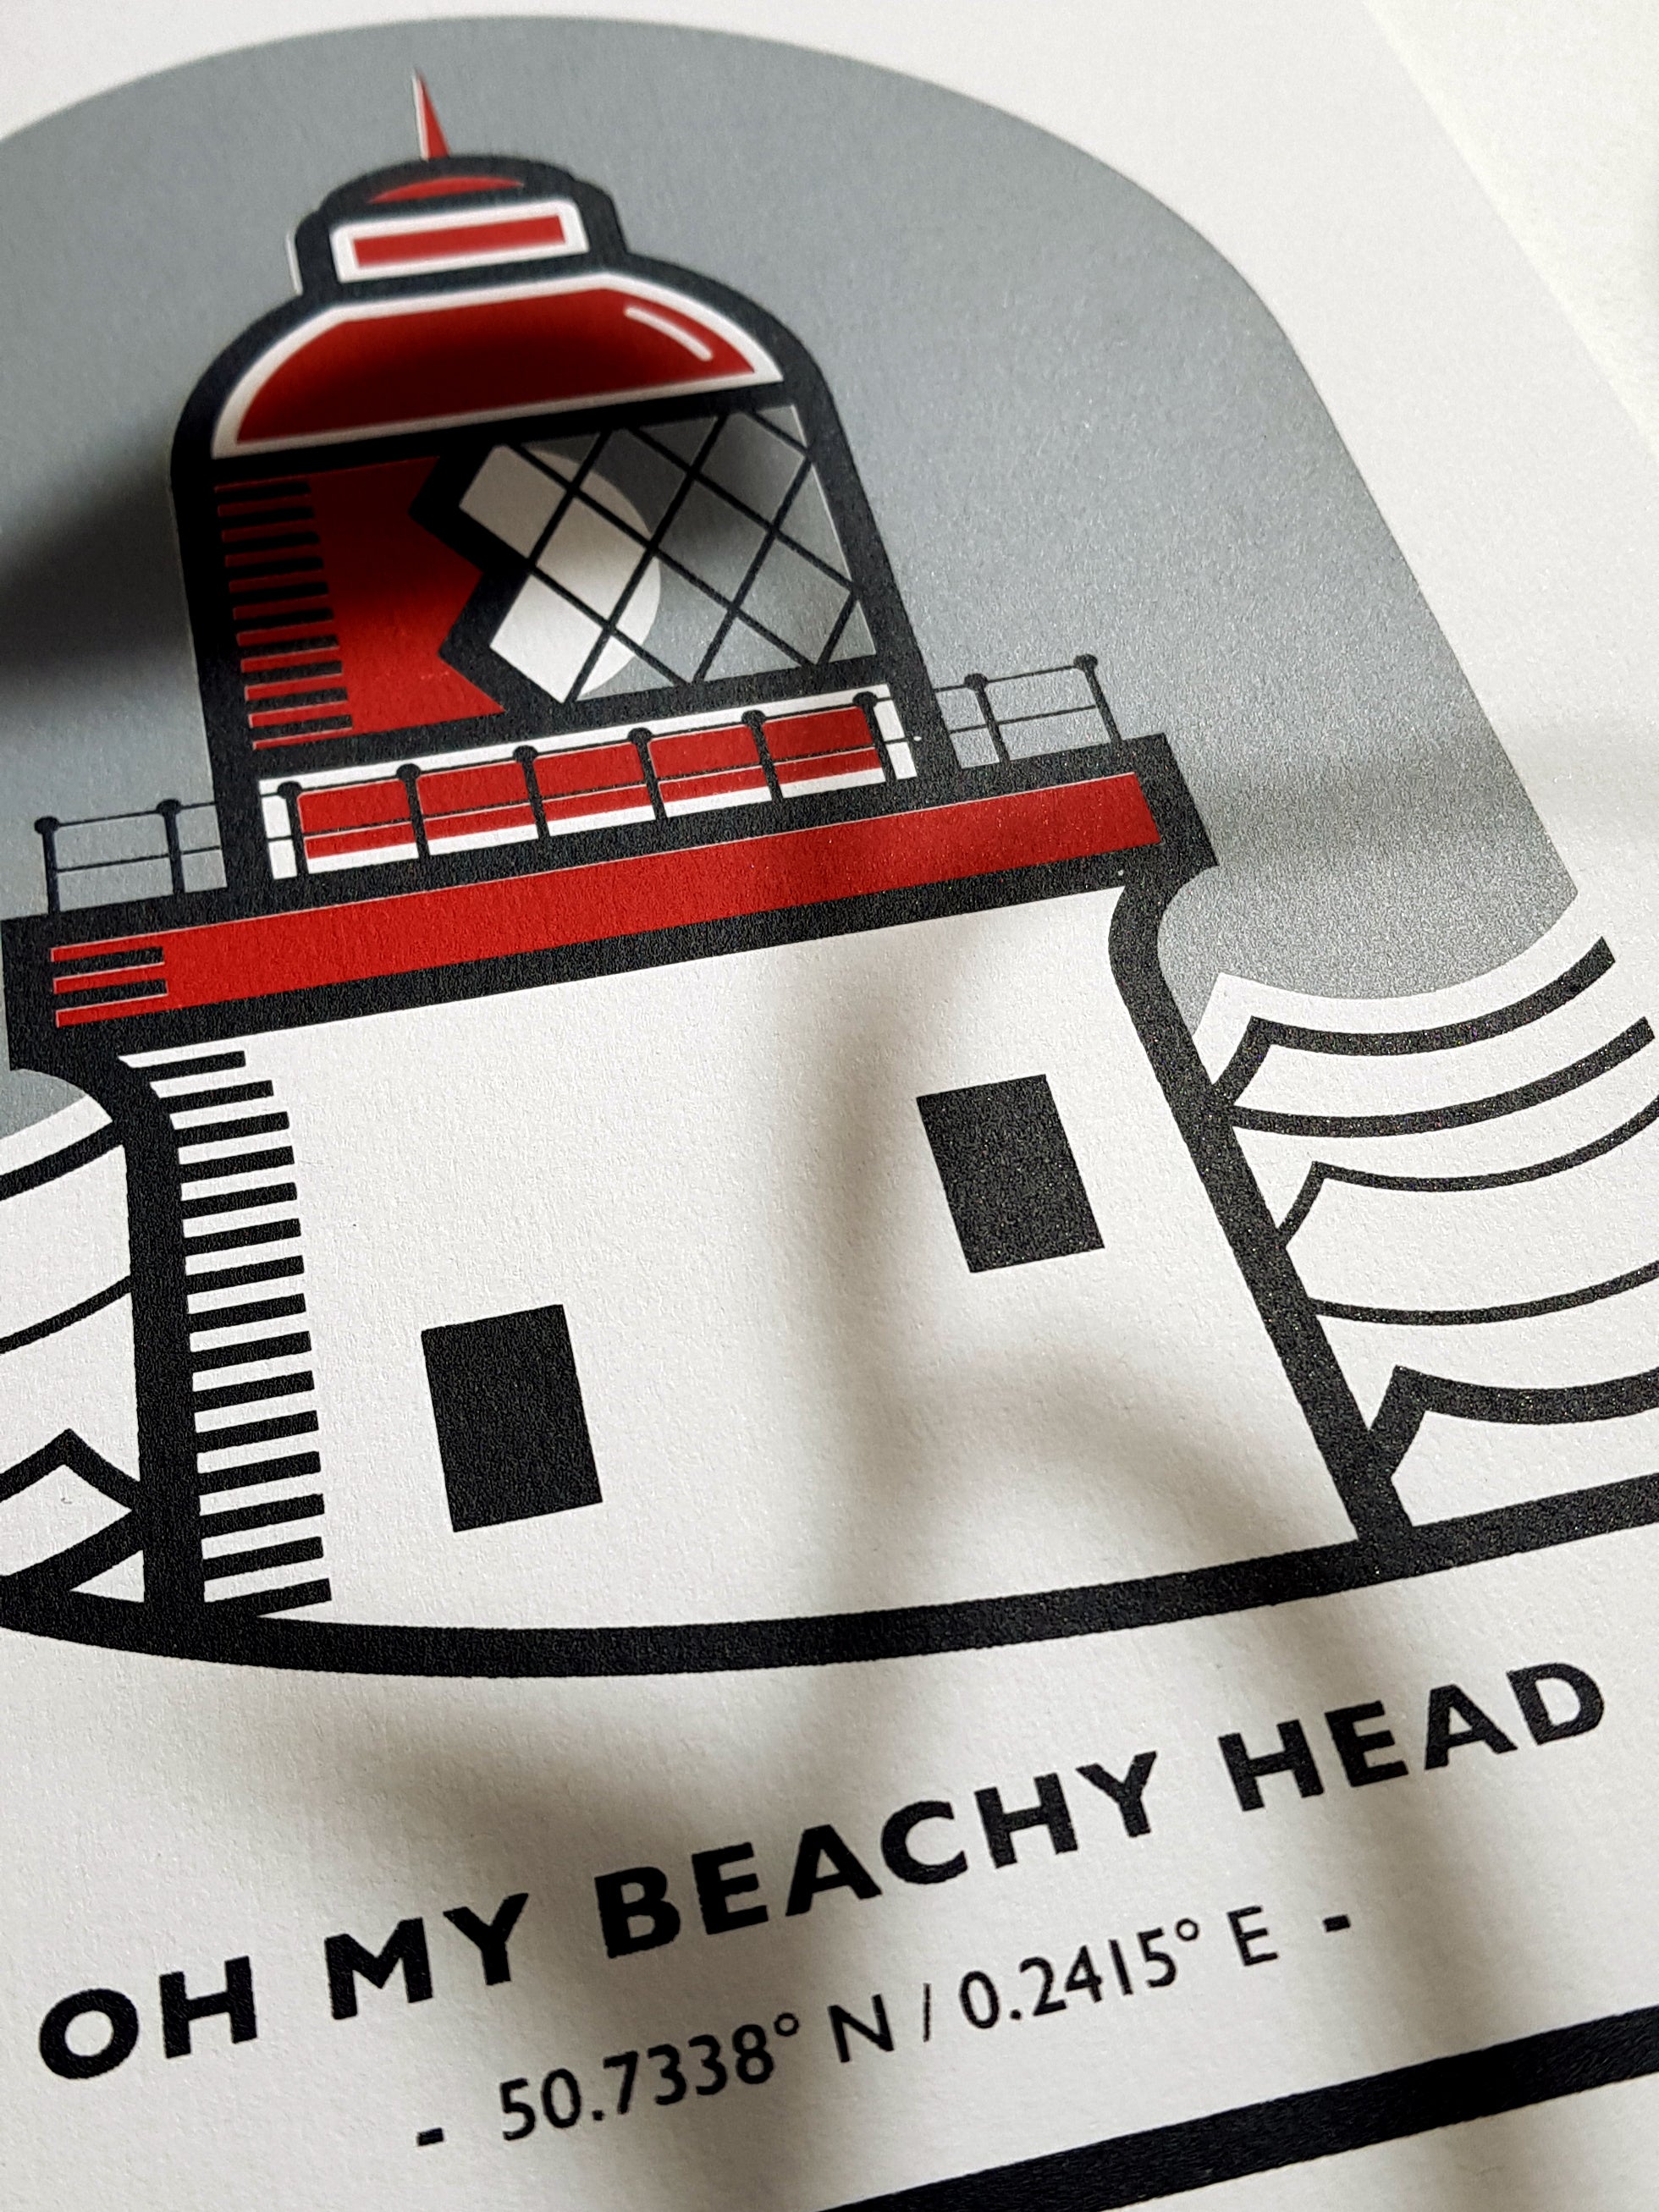 "Oh My Beachy Head" STORMY EASTBOURNE (SCREEN PRINT)